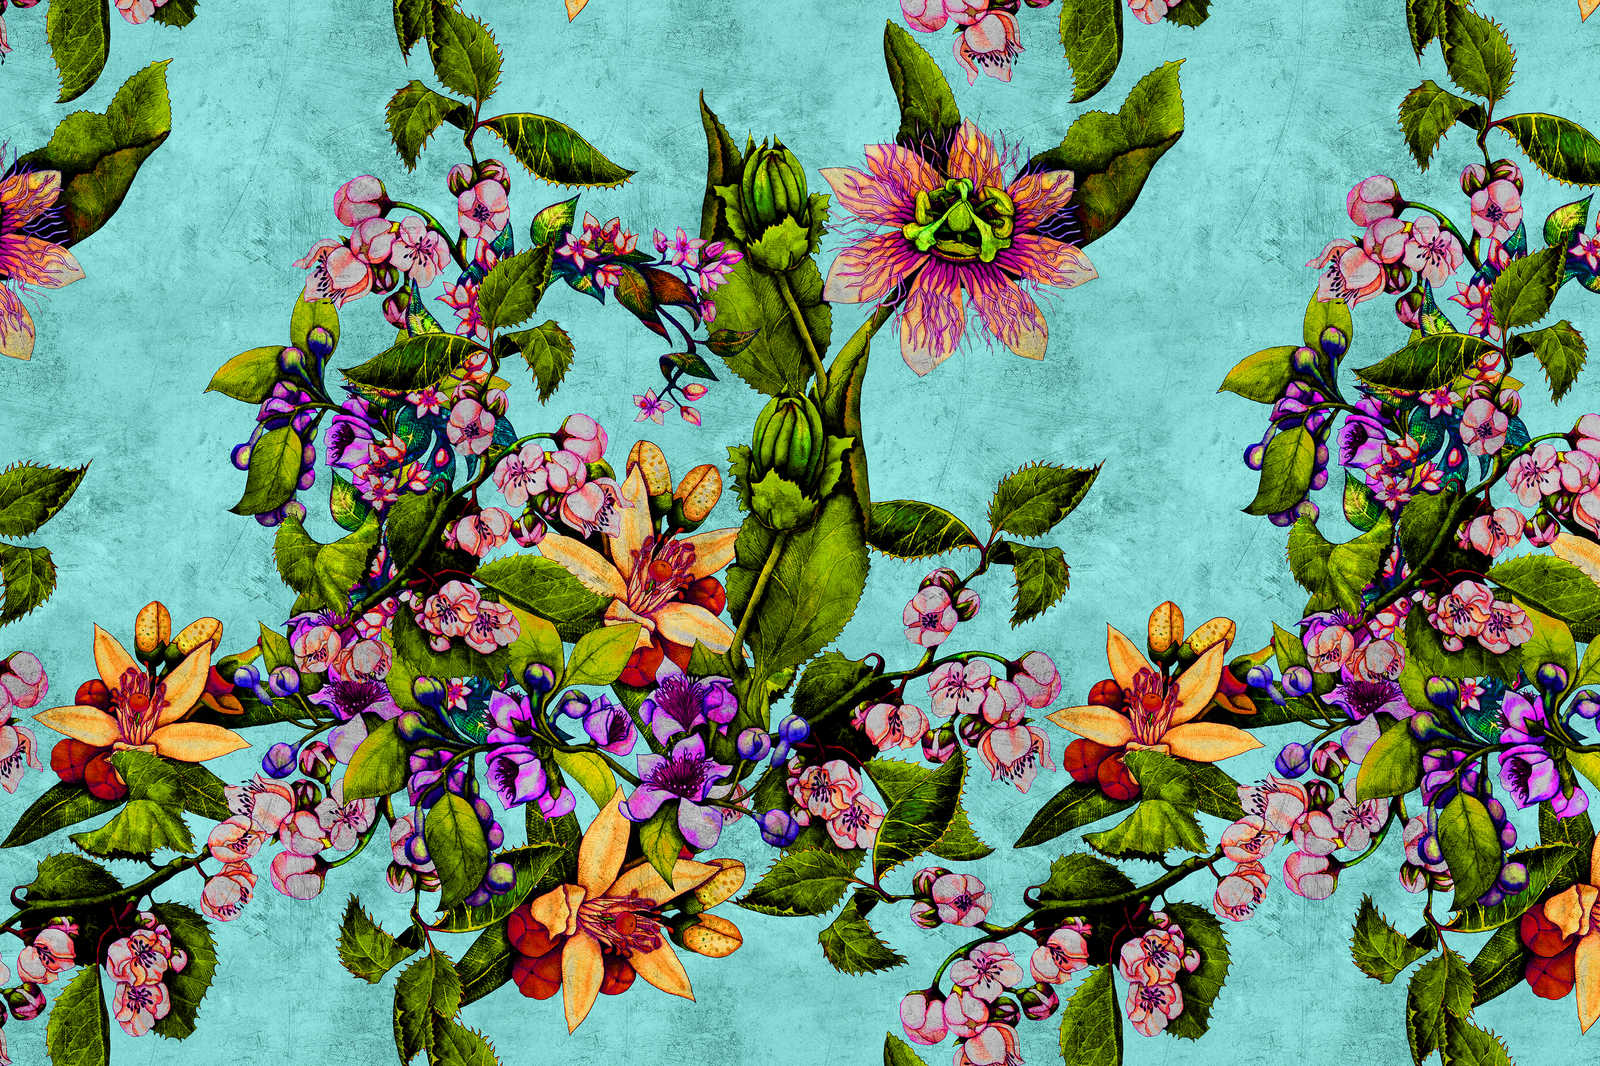             Tropical Passion 1 - Quadro su tela con motivi floreali - 0,90 m x 0,60 m
        